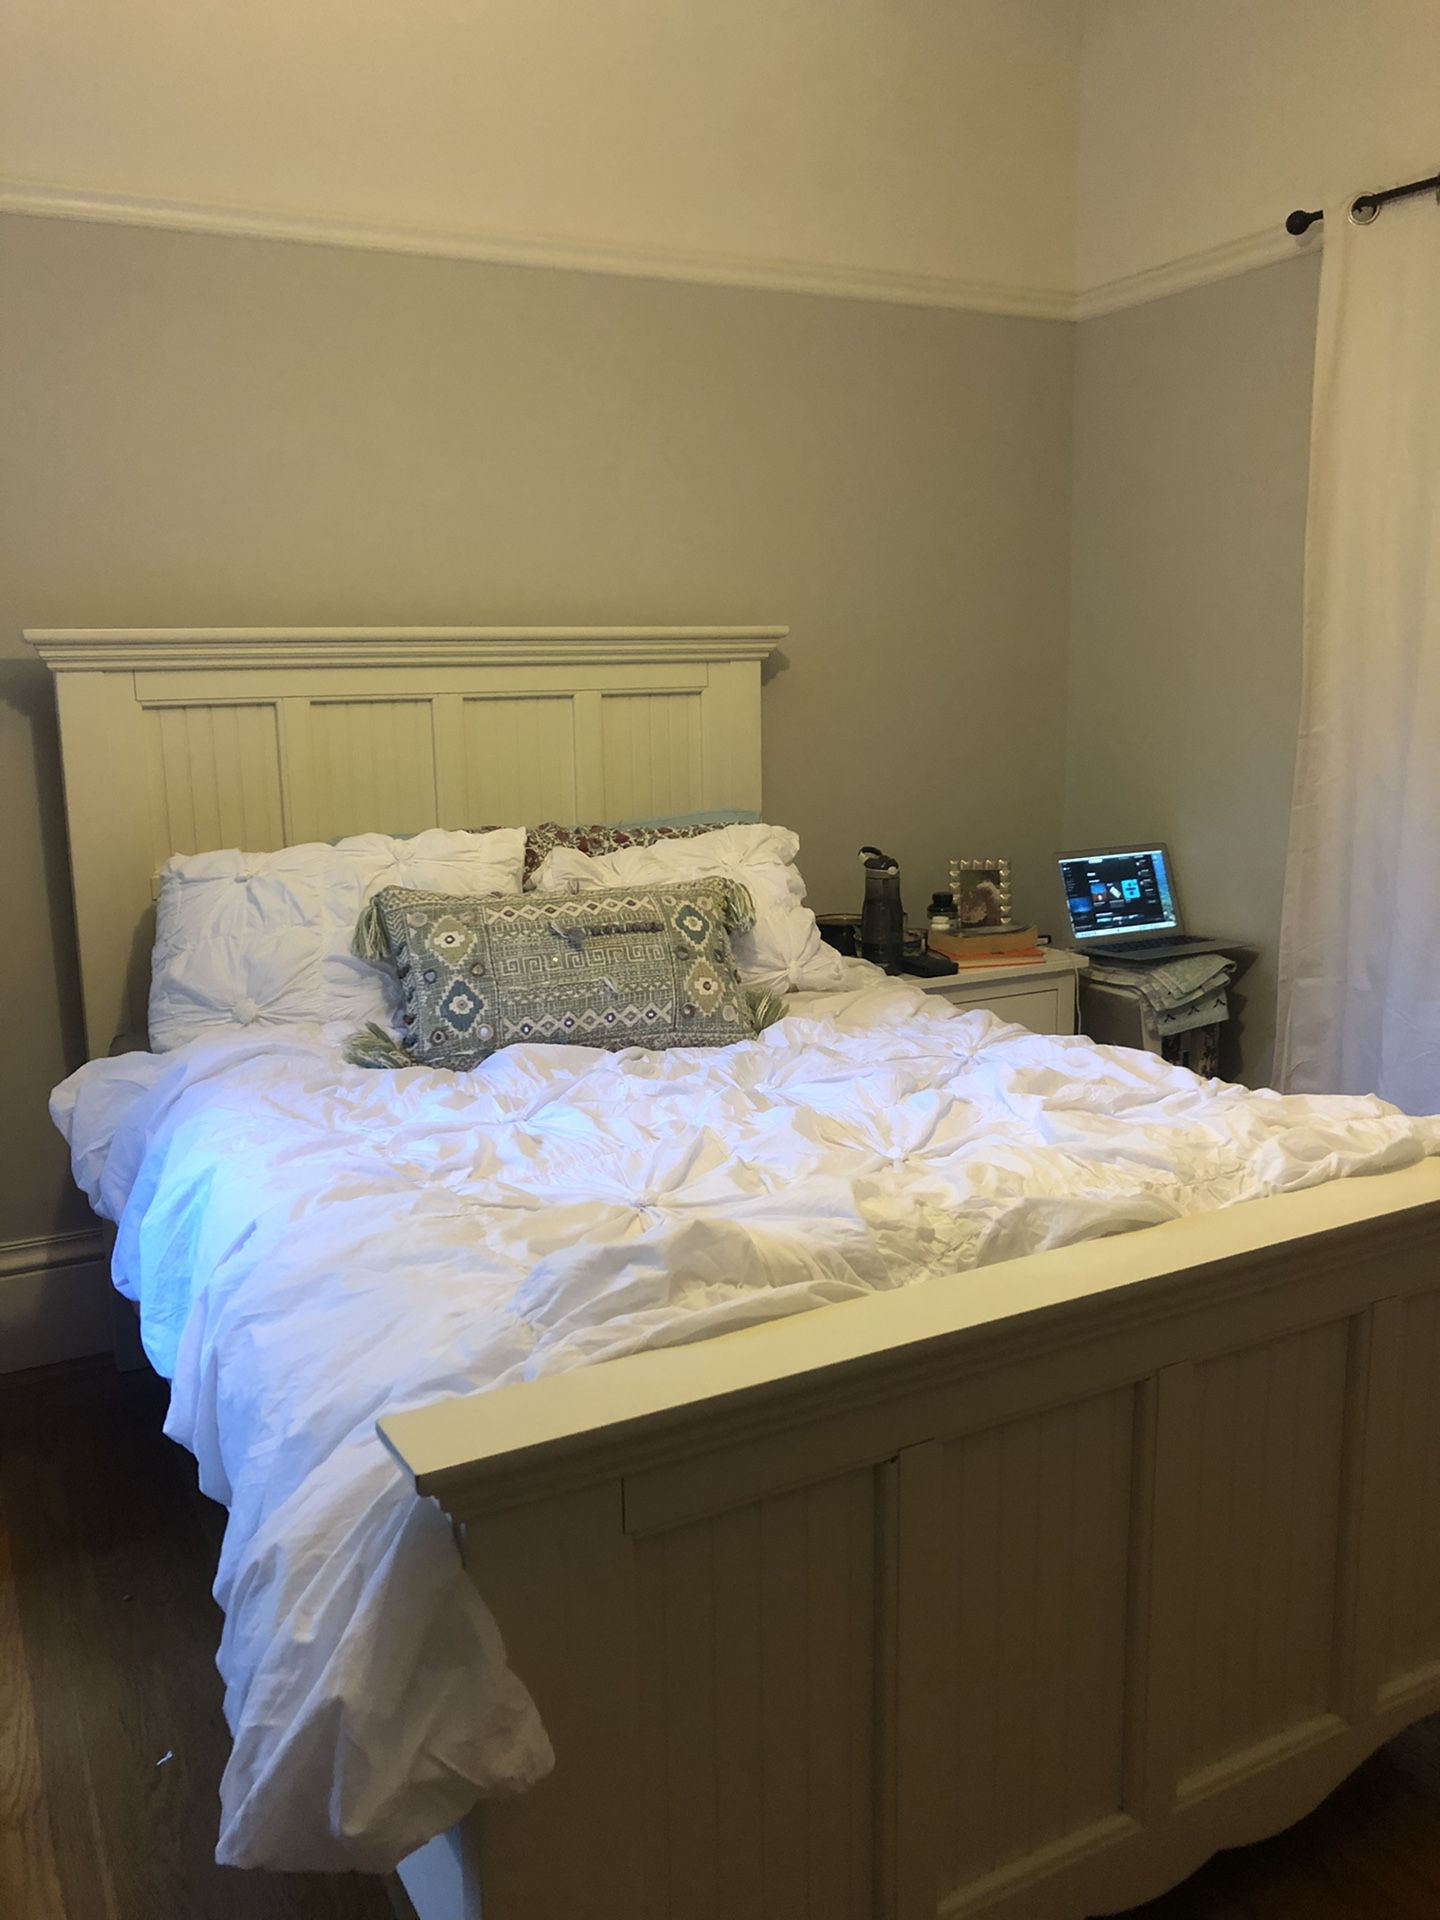 Bed frame, mattress, and box frame for FULL